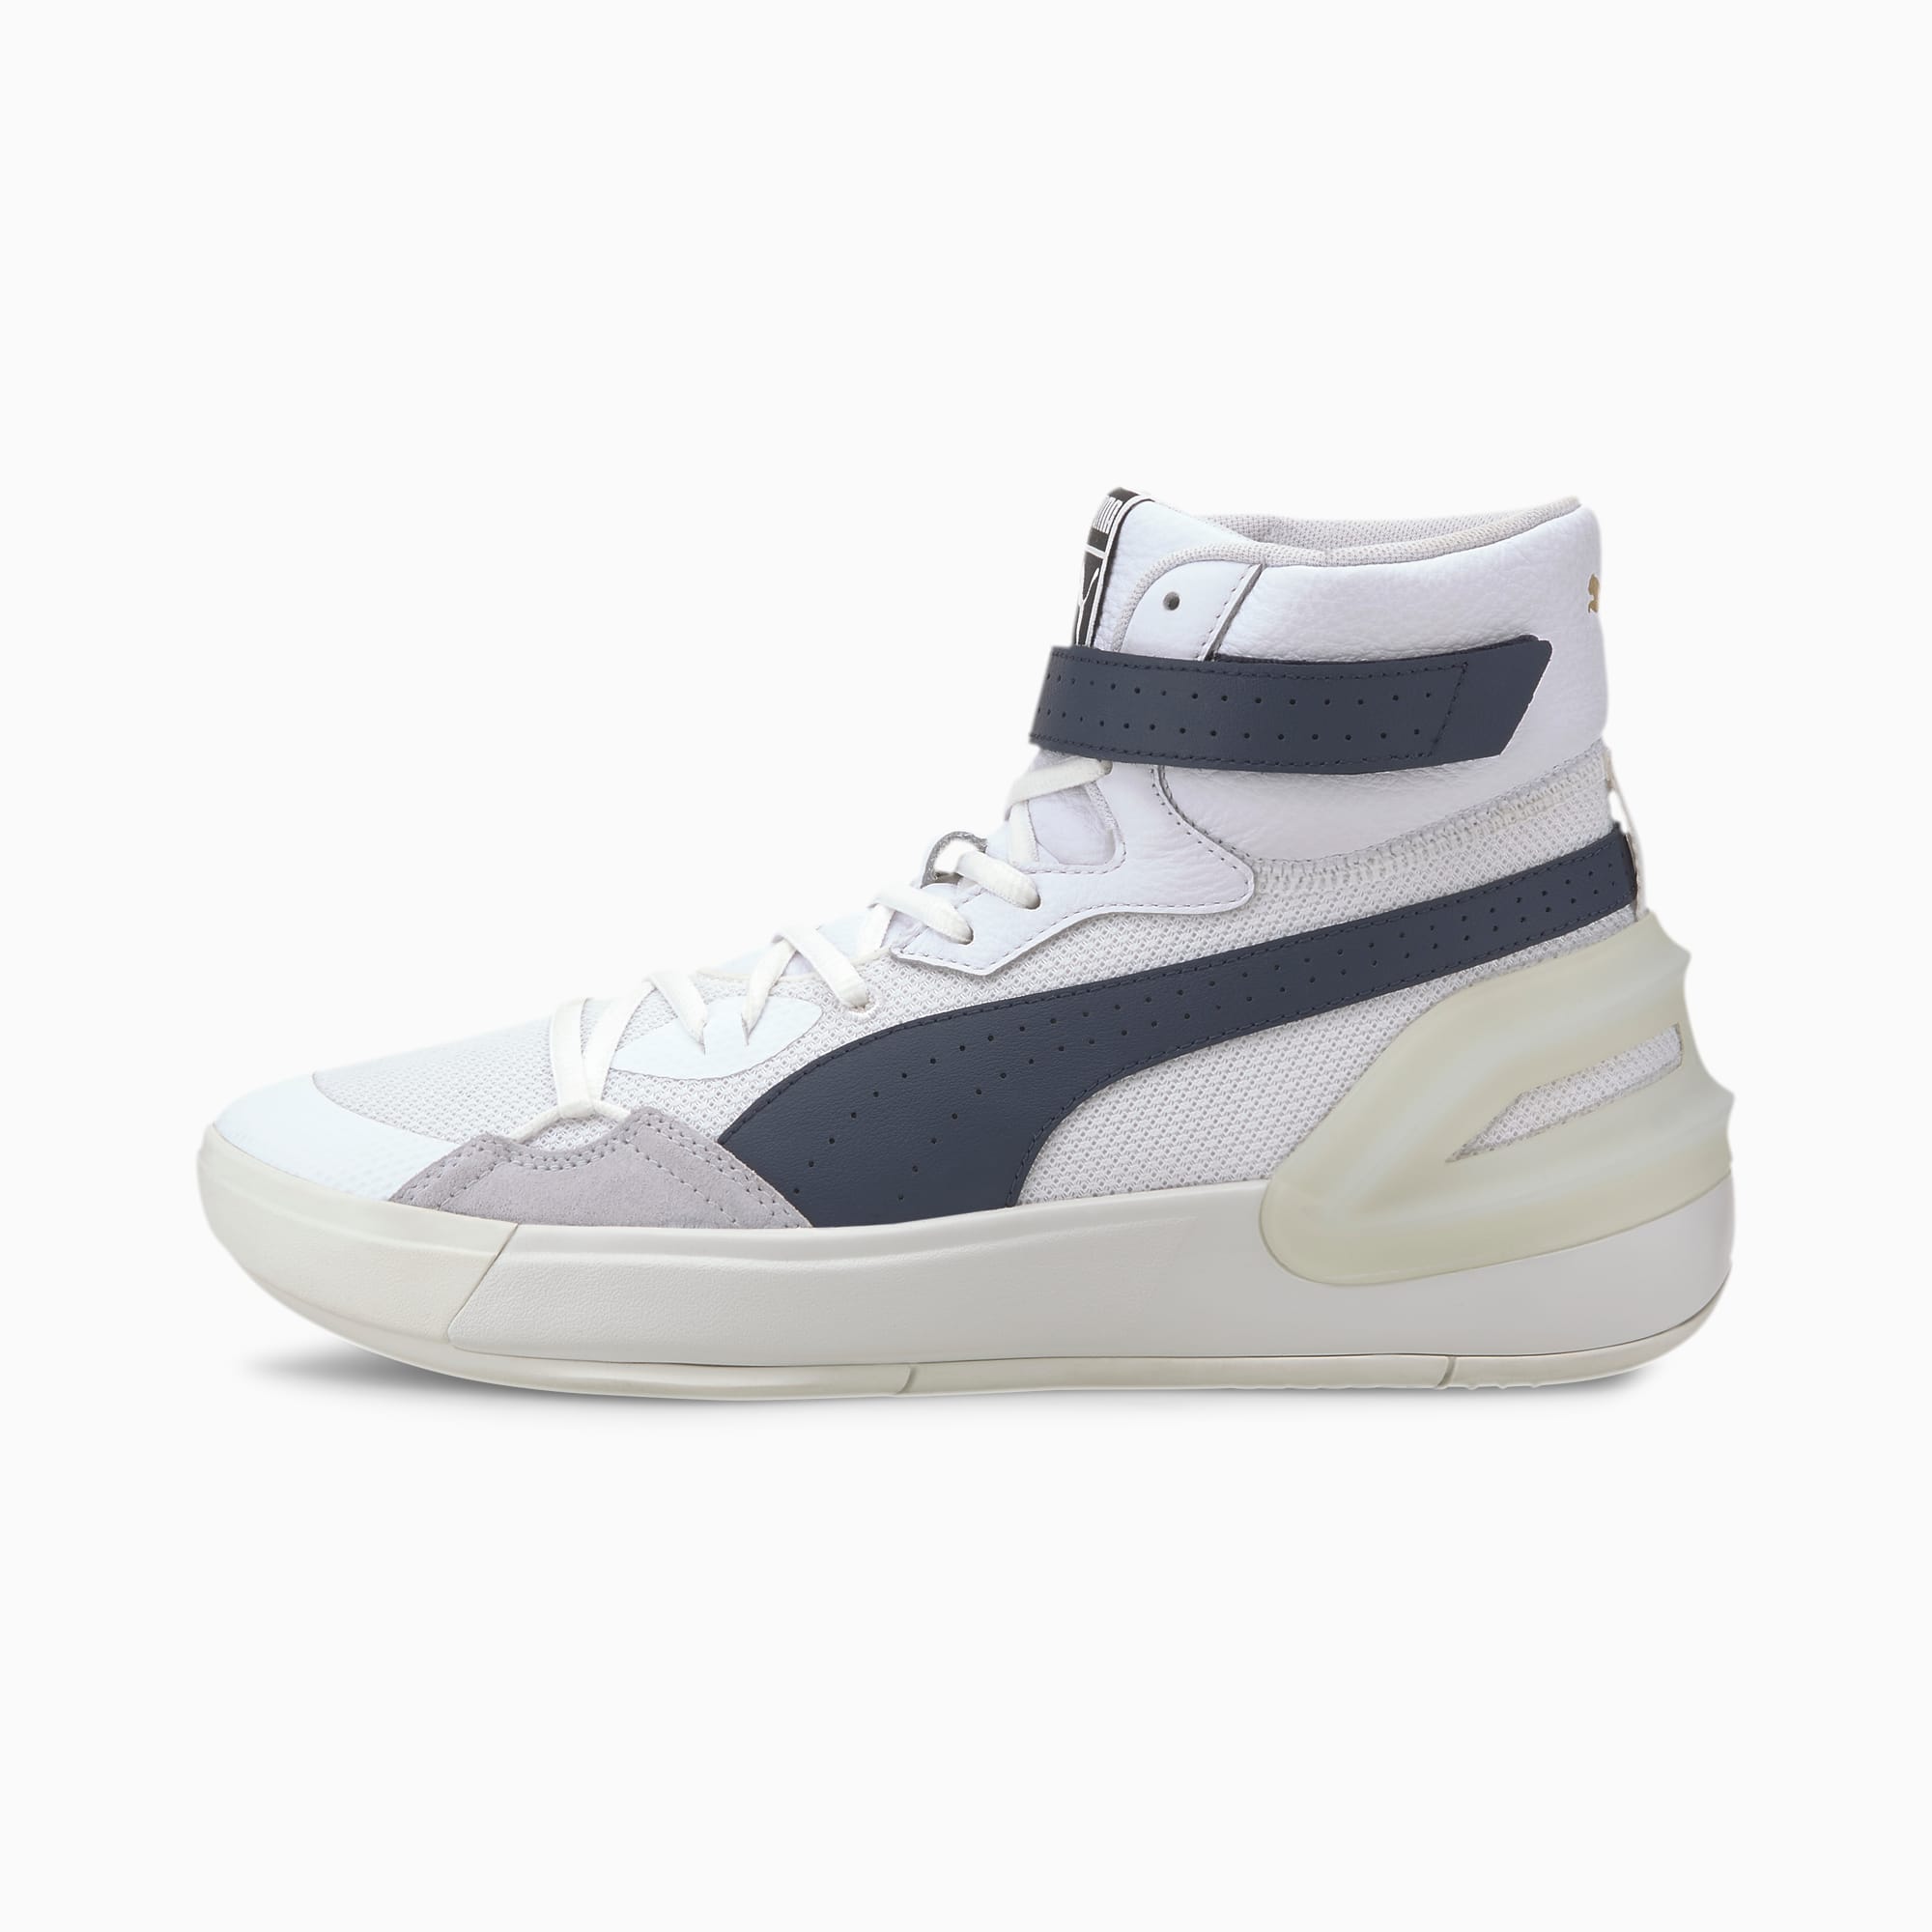 puma basketball shoes release